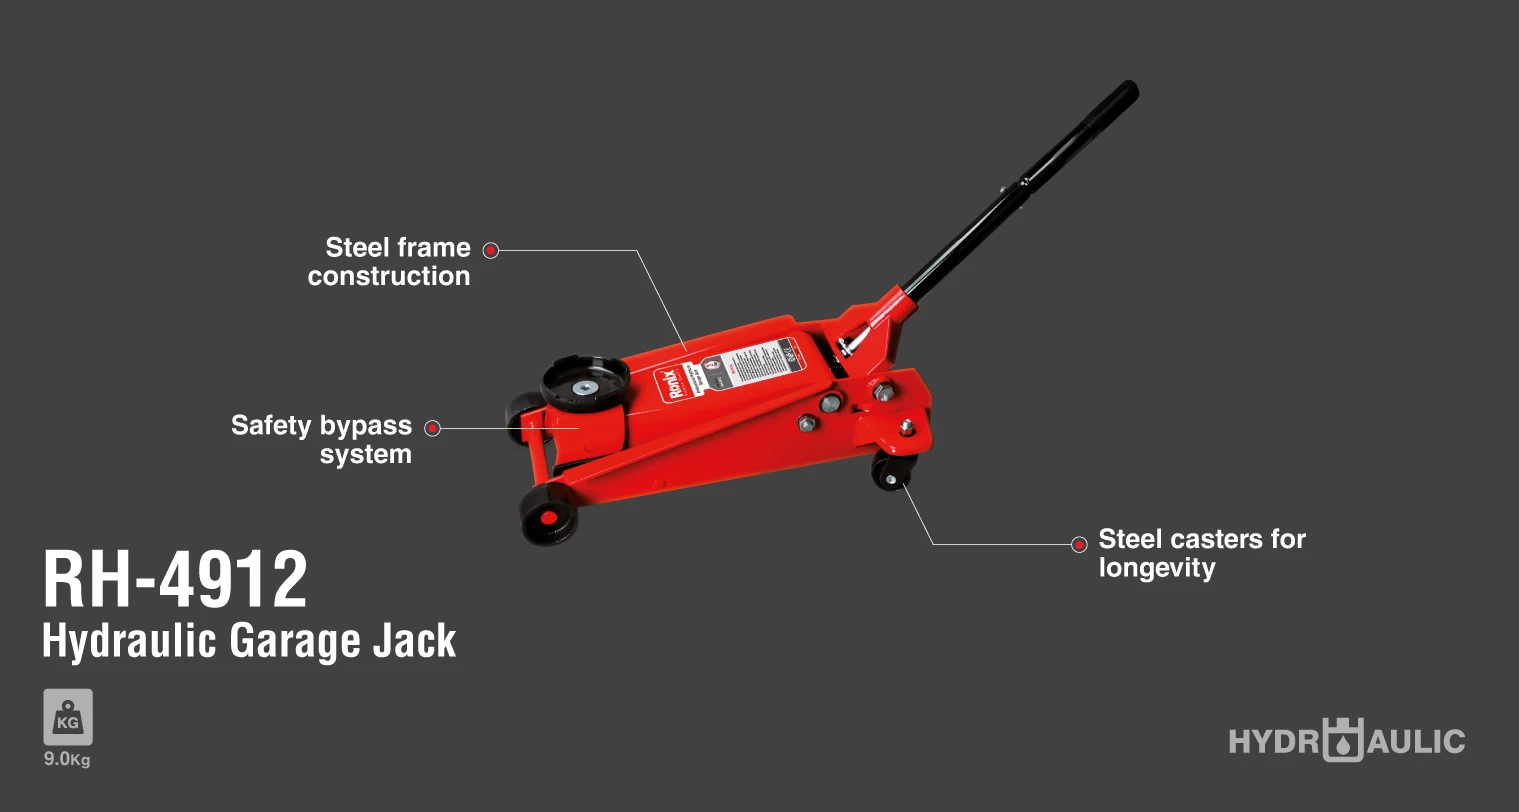 Hydraulic Garage Jack 3 Ton_details